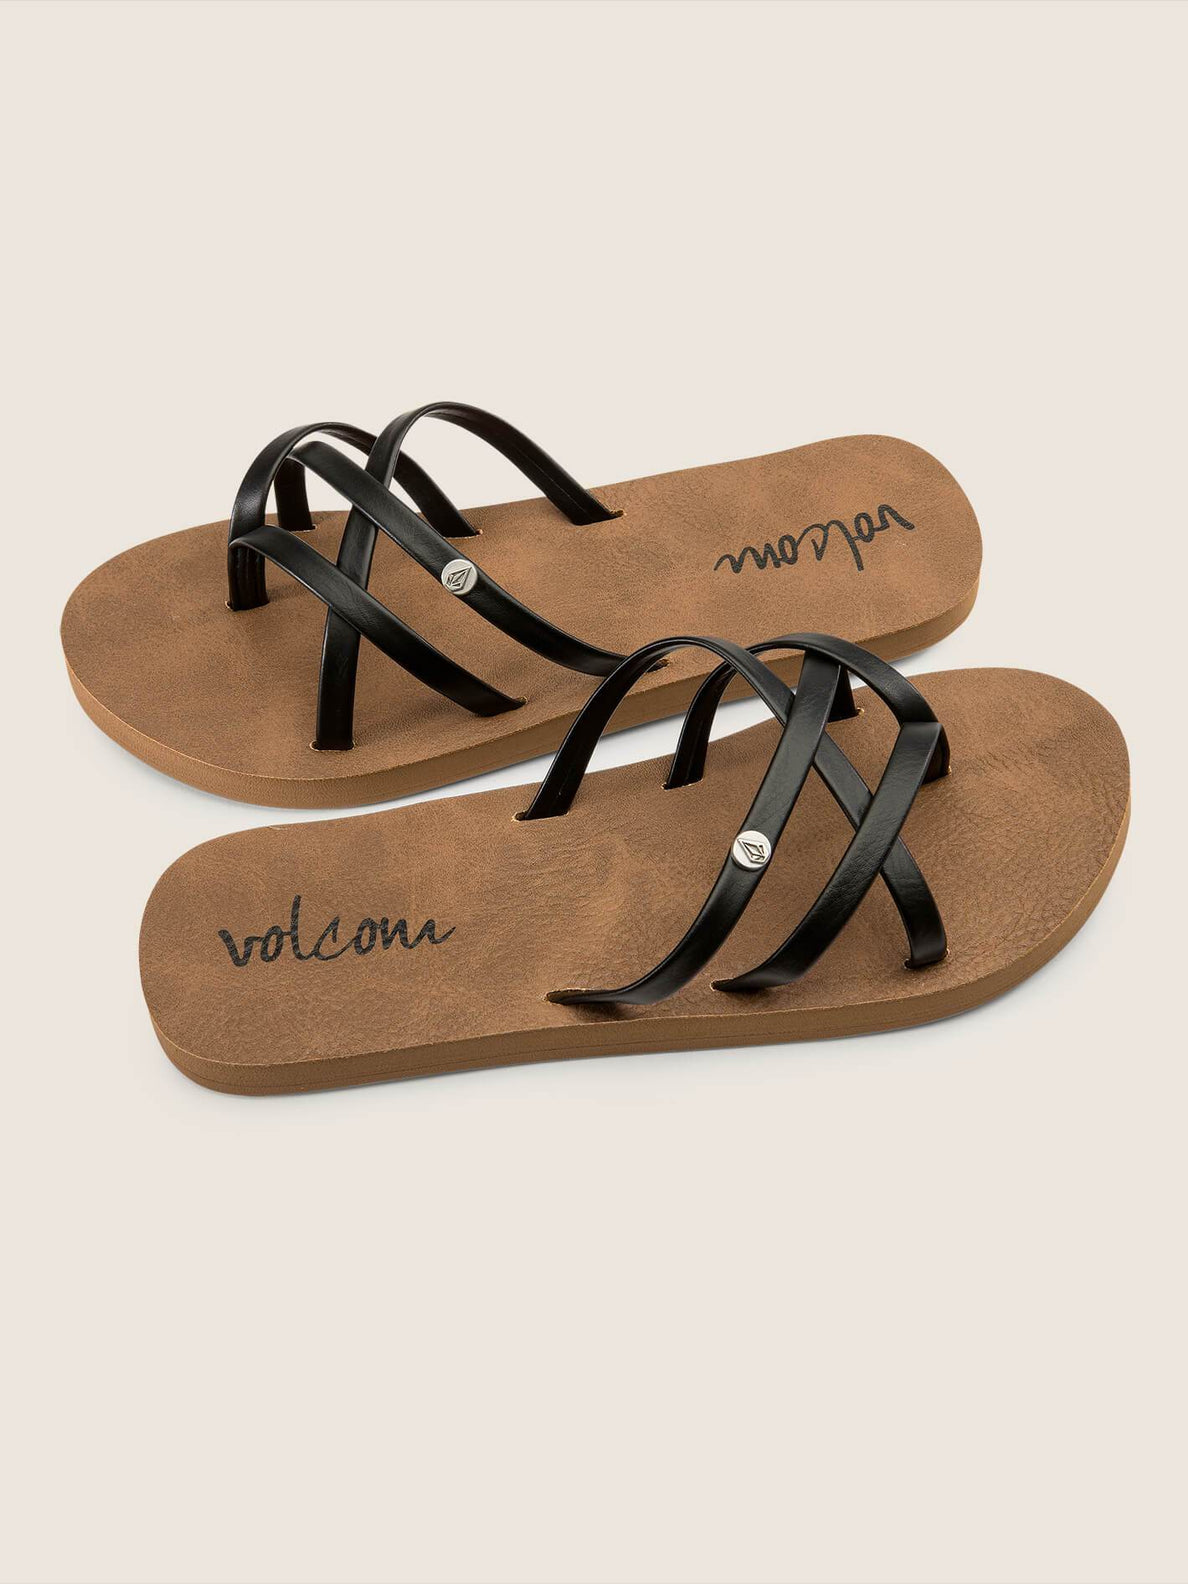 volcom strappy sandals